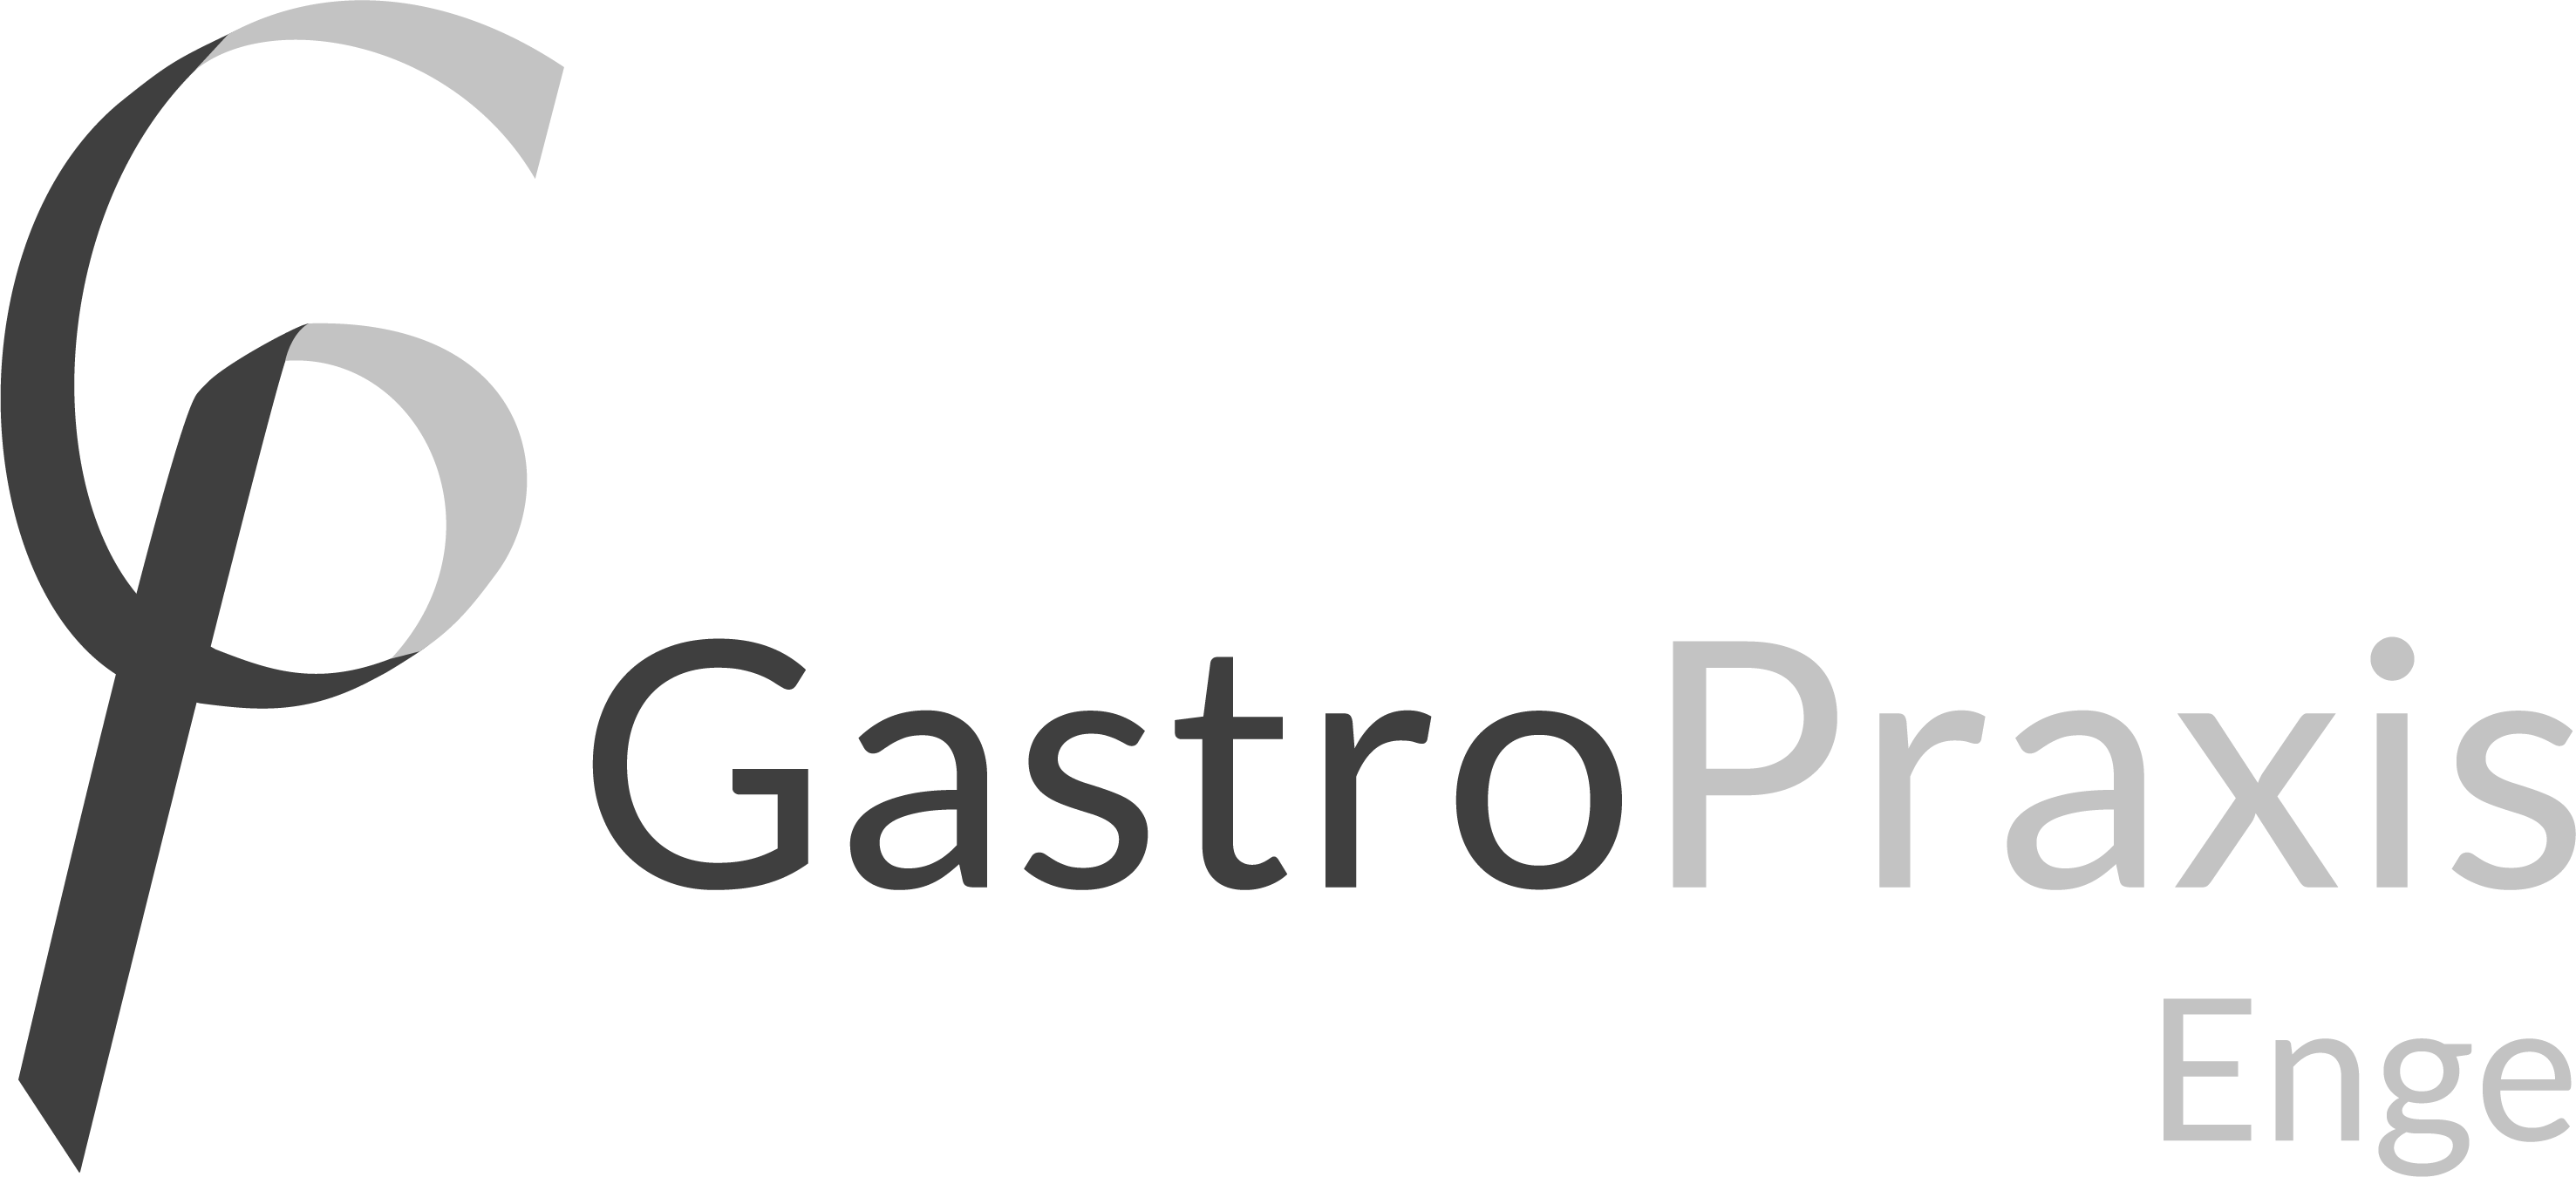 GastroPraxis-2021